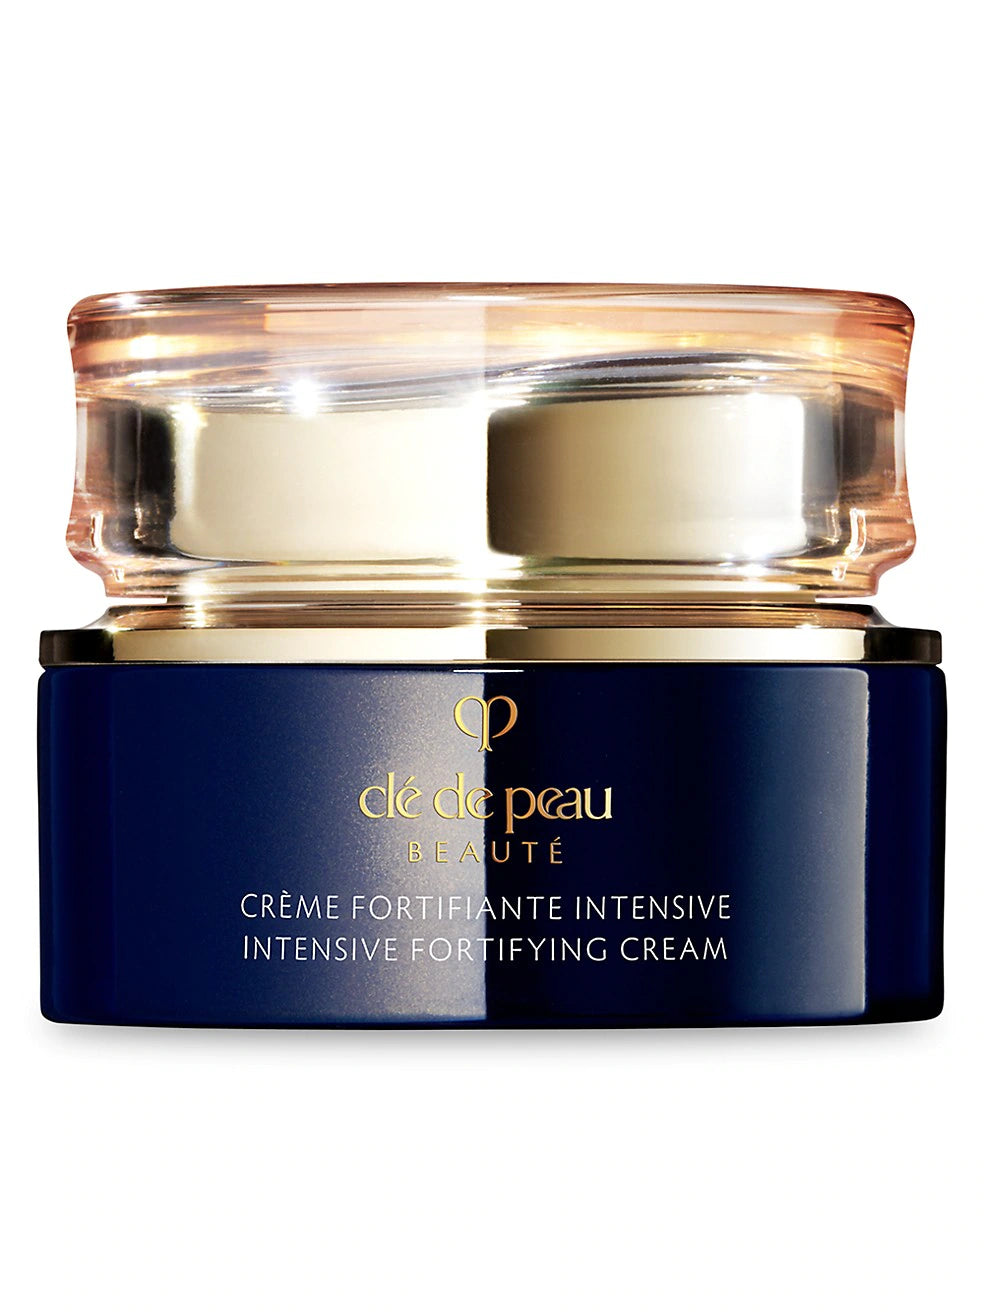 Cle de Peau Beaute Intensive Fortifying Cream 1.7 oz/ 50ml